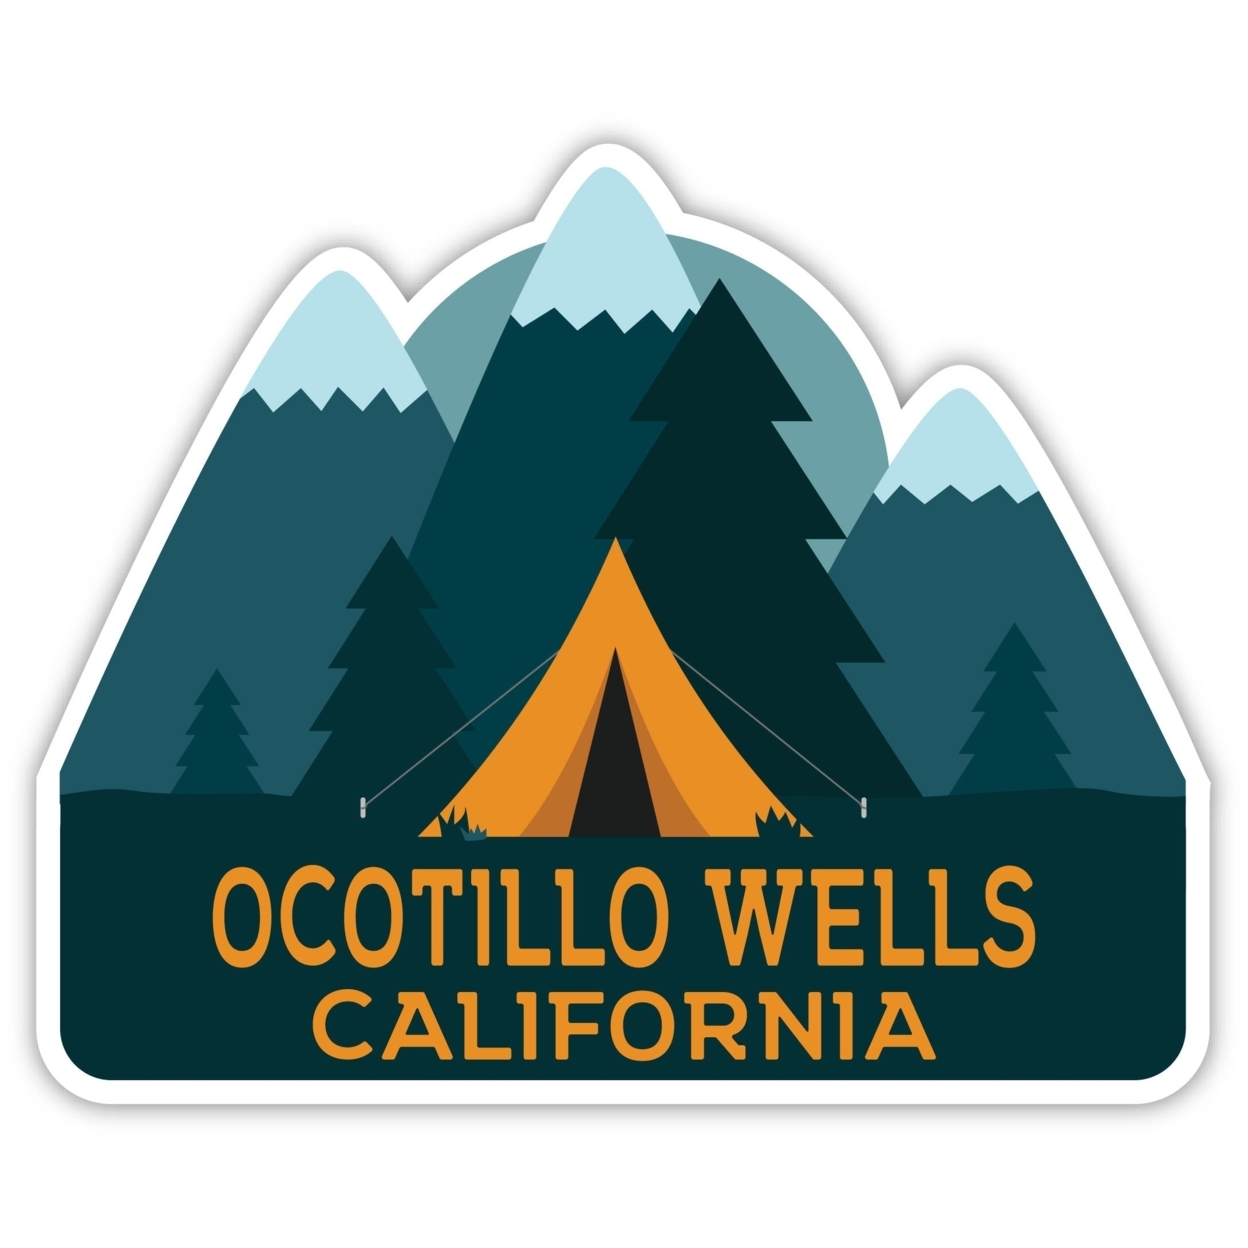 Ocotillo Wells California Souvenir Decorative Stickers (Choose Theme And Size) - Single Unit, 2-Inch, Adventures Awaits